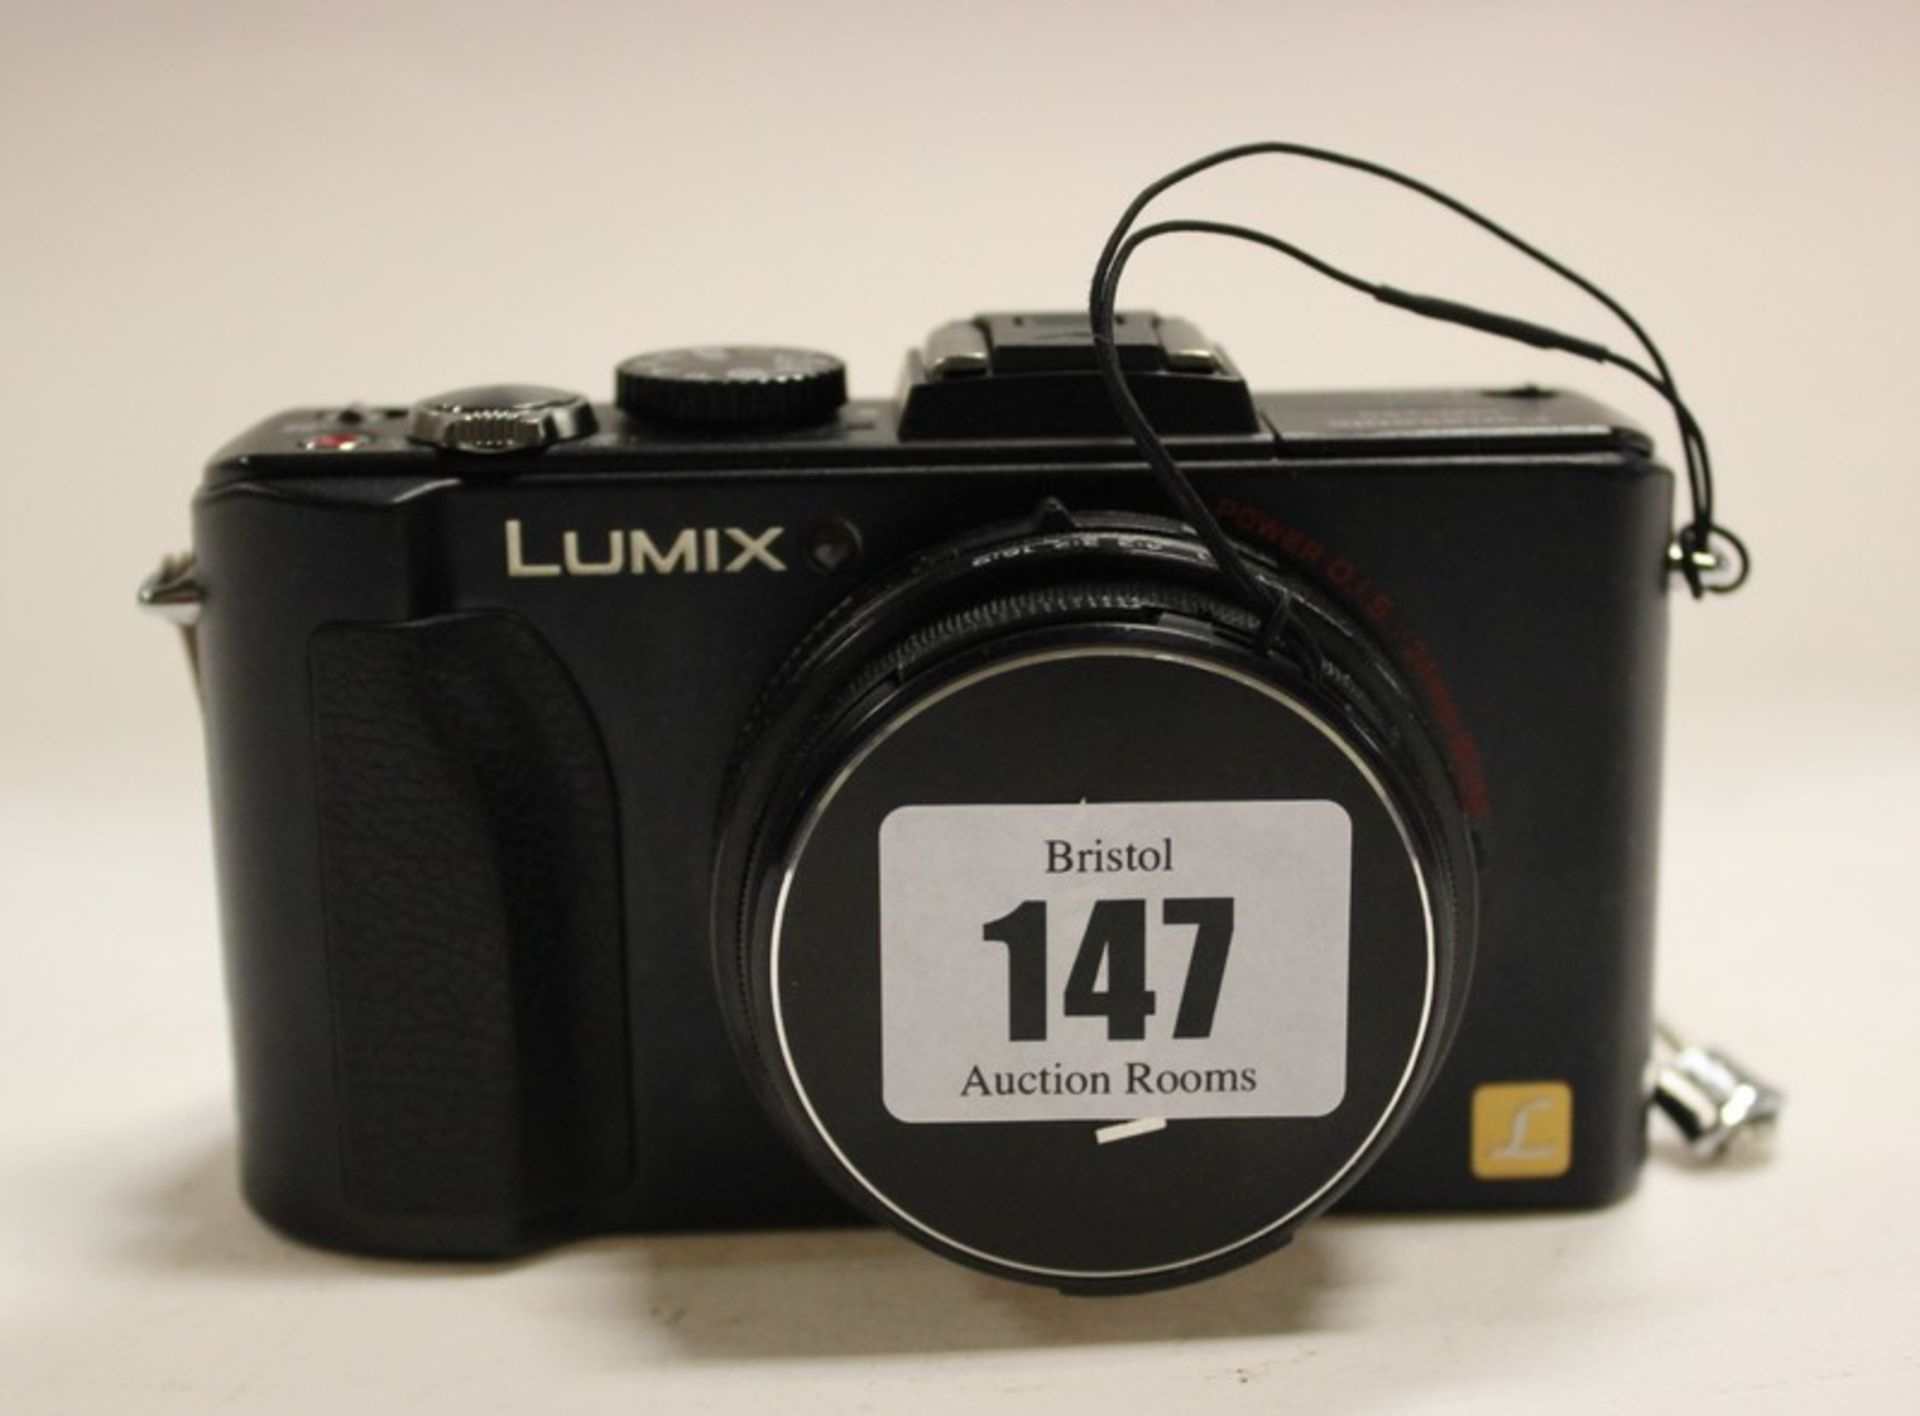 A Panasonic Lumix DMC-LX5 camera.